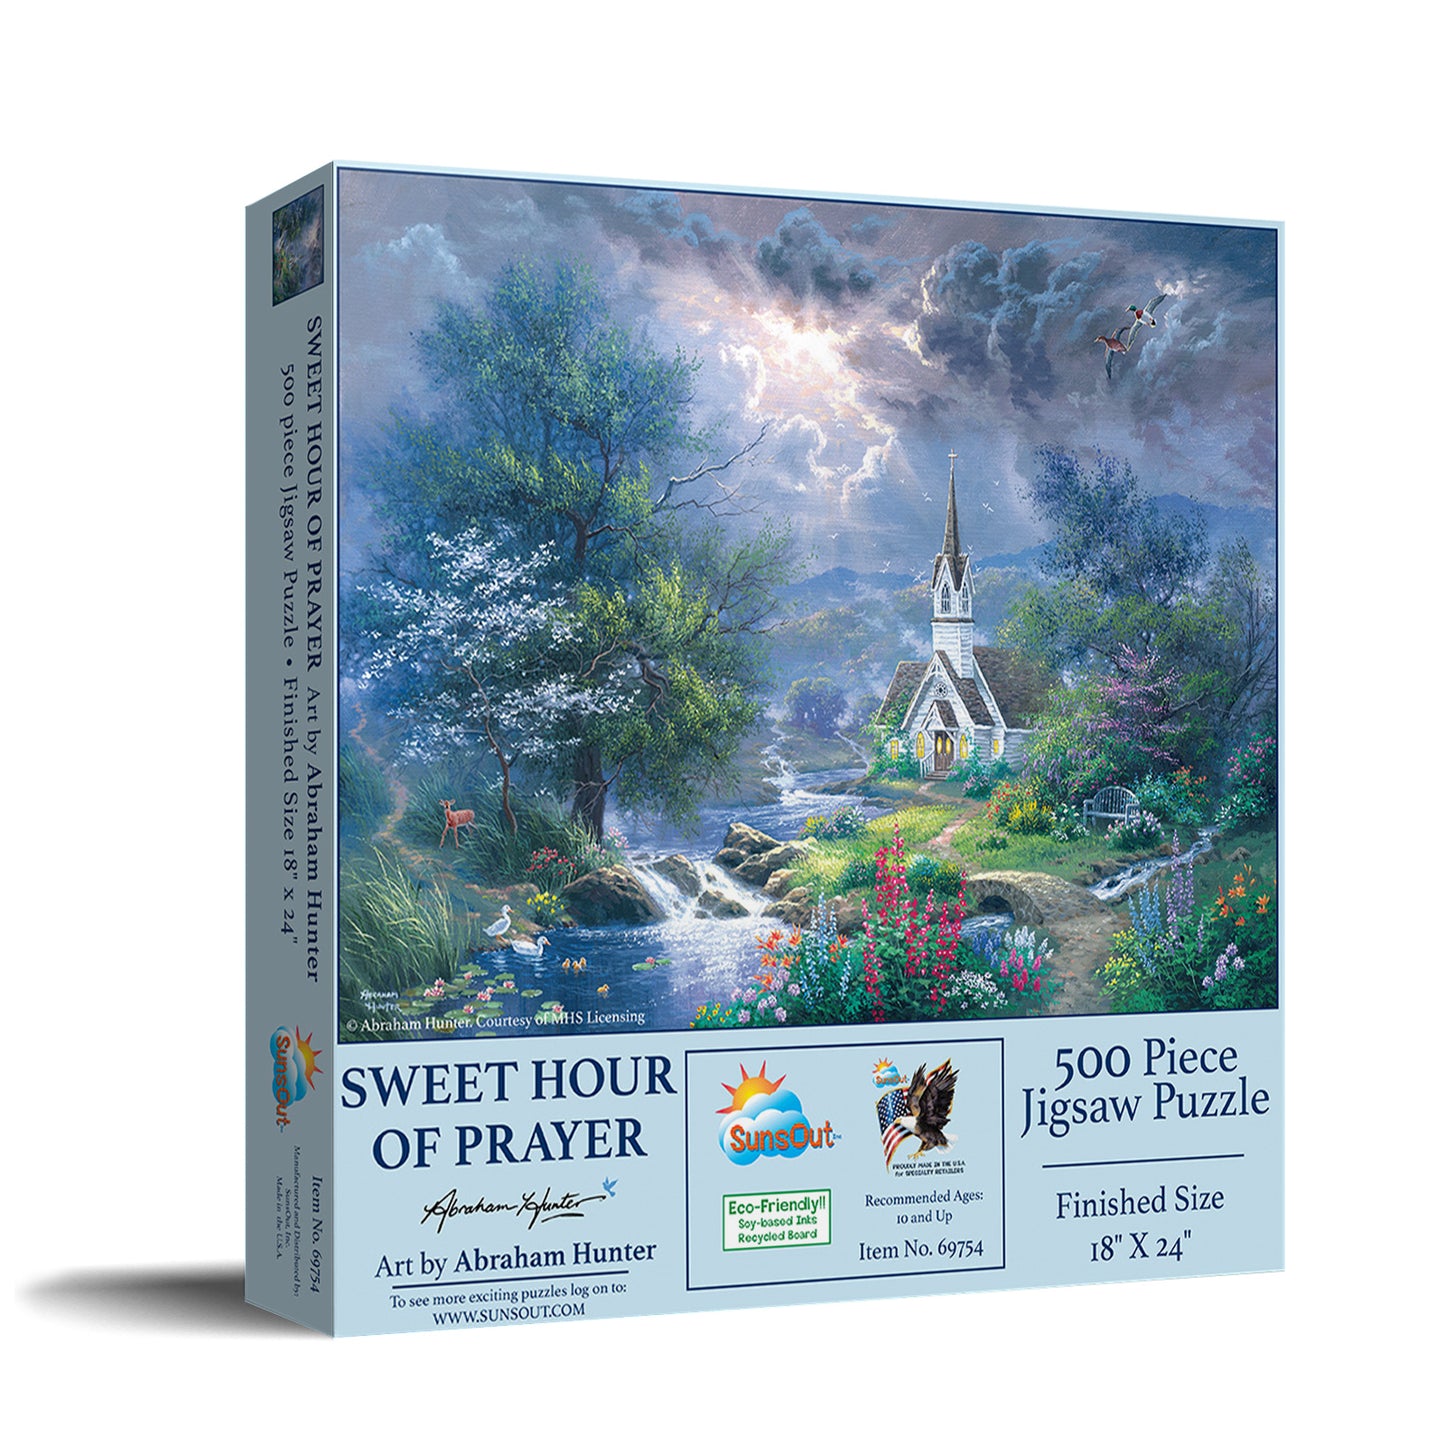 Sweet Hour of Prayer - 500 Piece Jigsaw Puzzle